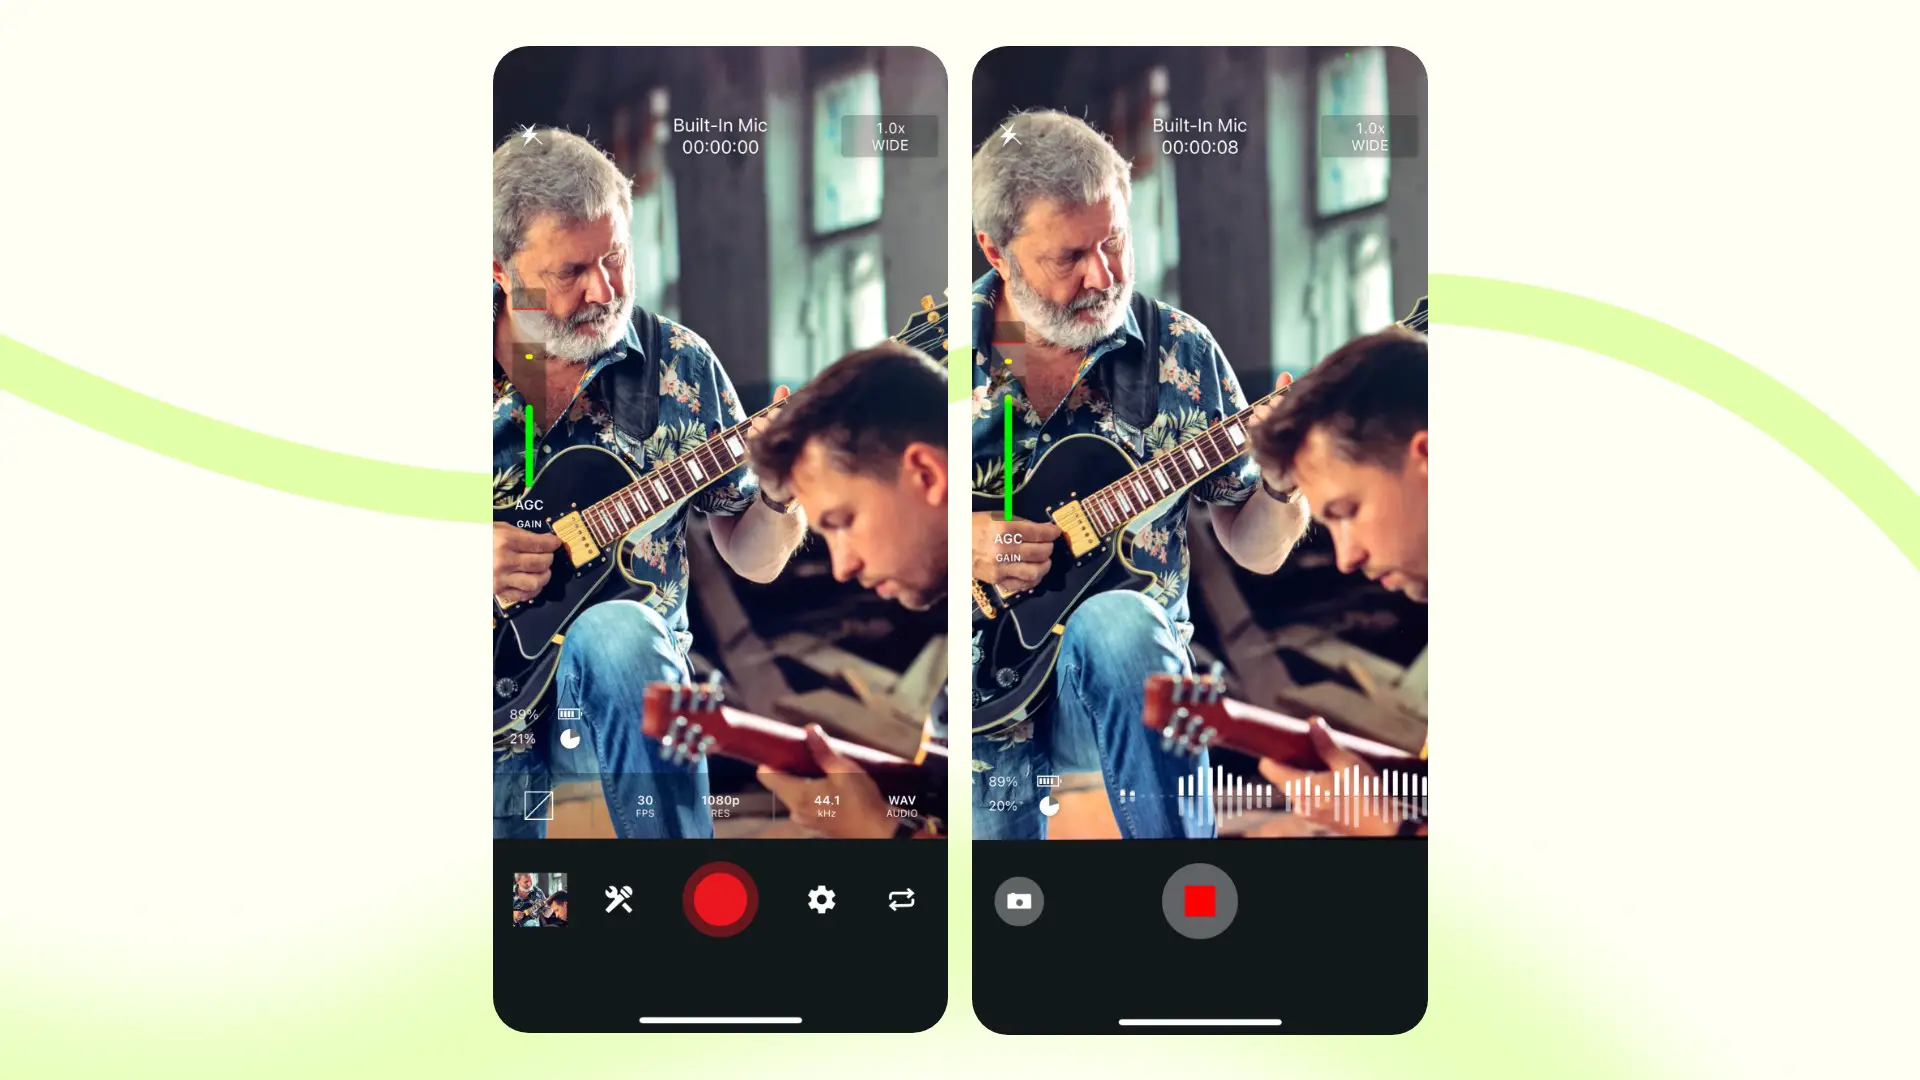 Video recording performance with the ShurePlus MOTIV Video app